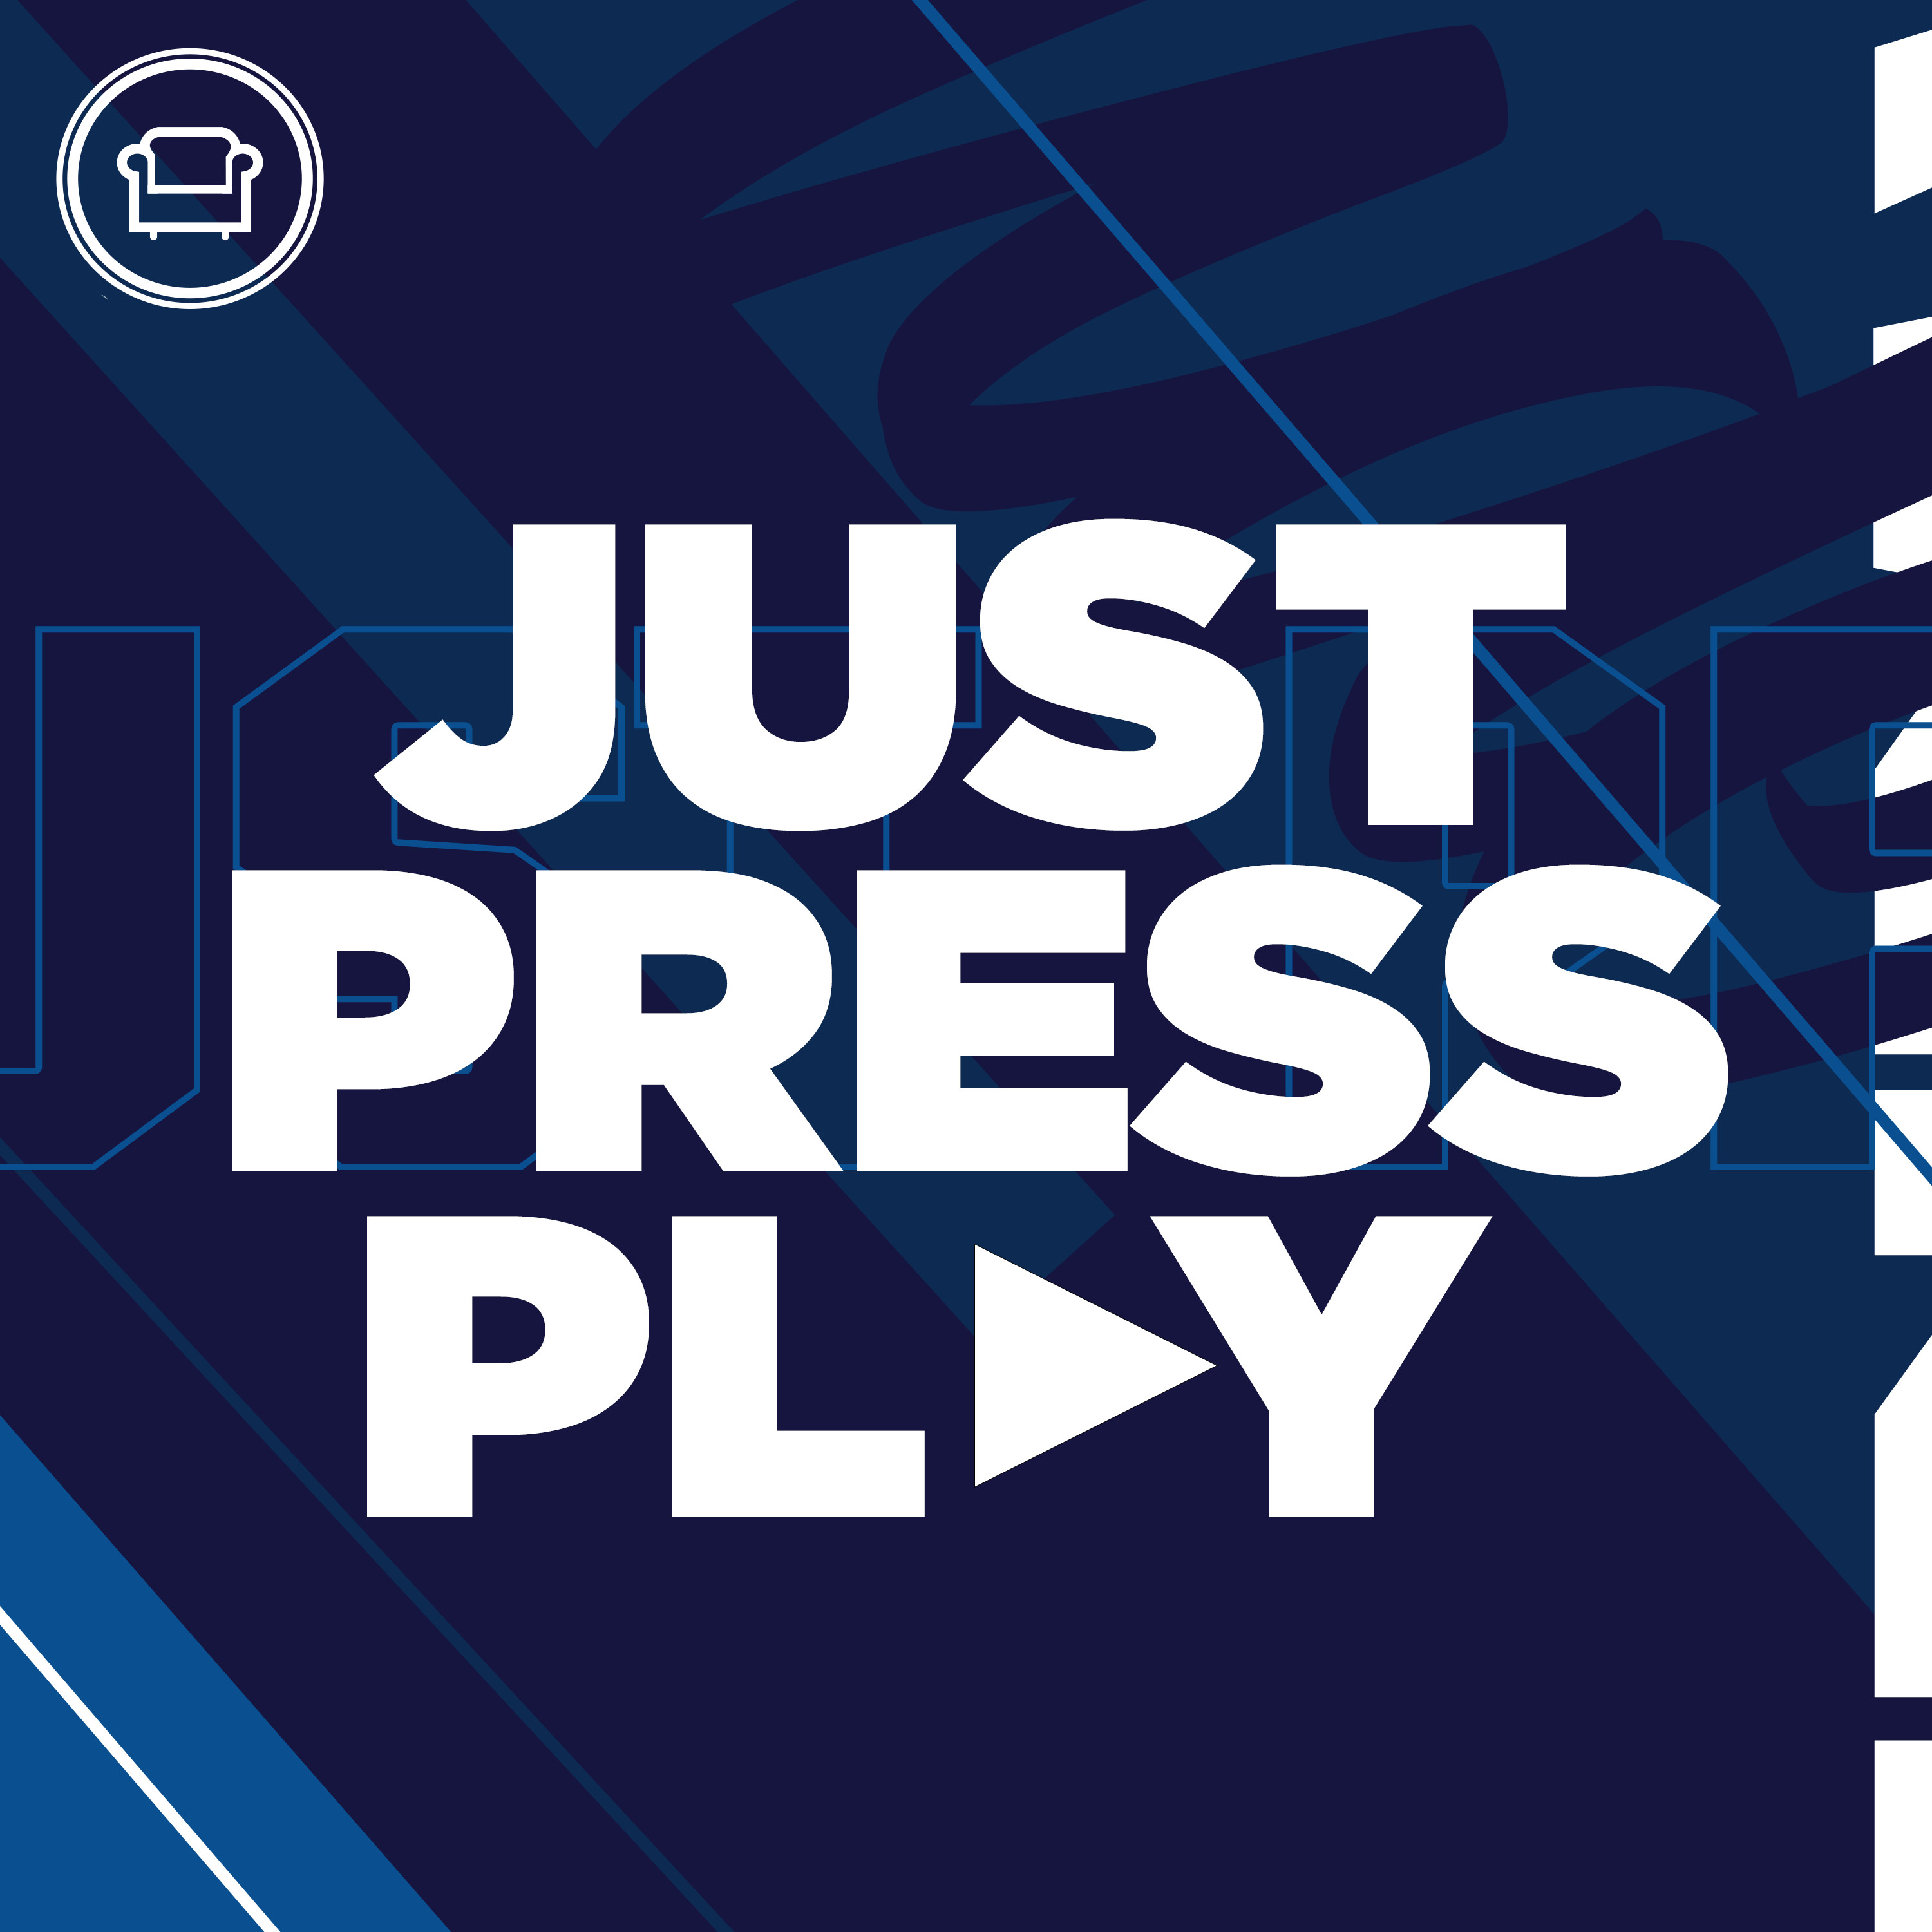 Just press. Press Play. Play Podcast. Just Press haha slowly.